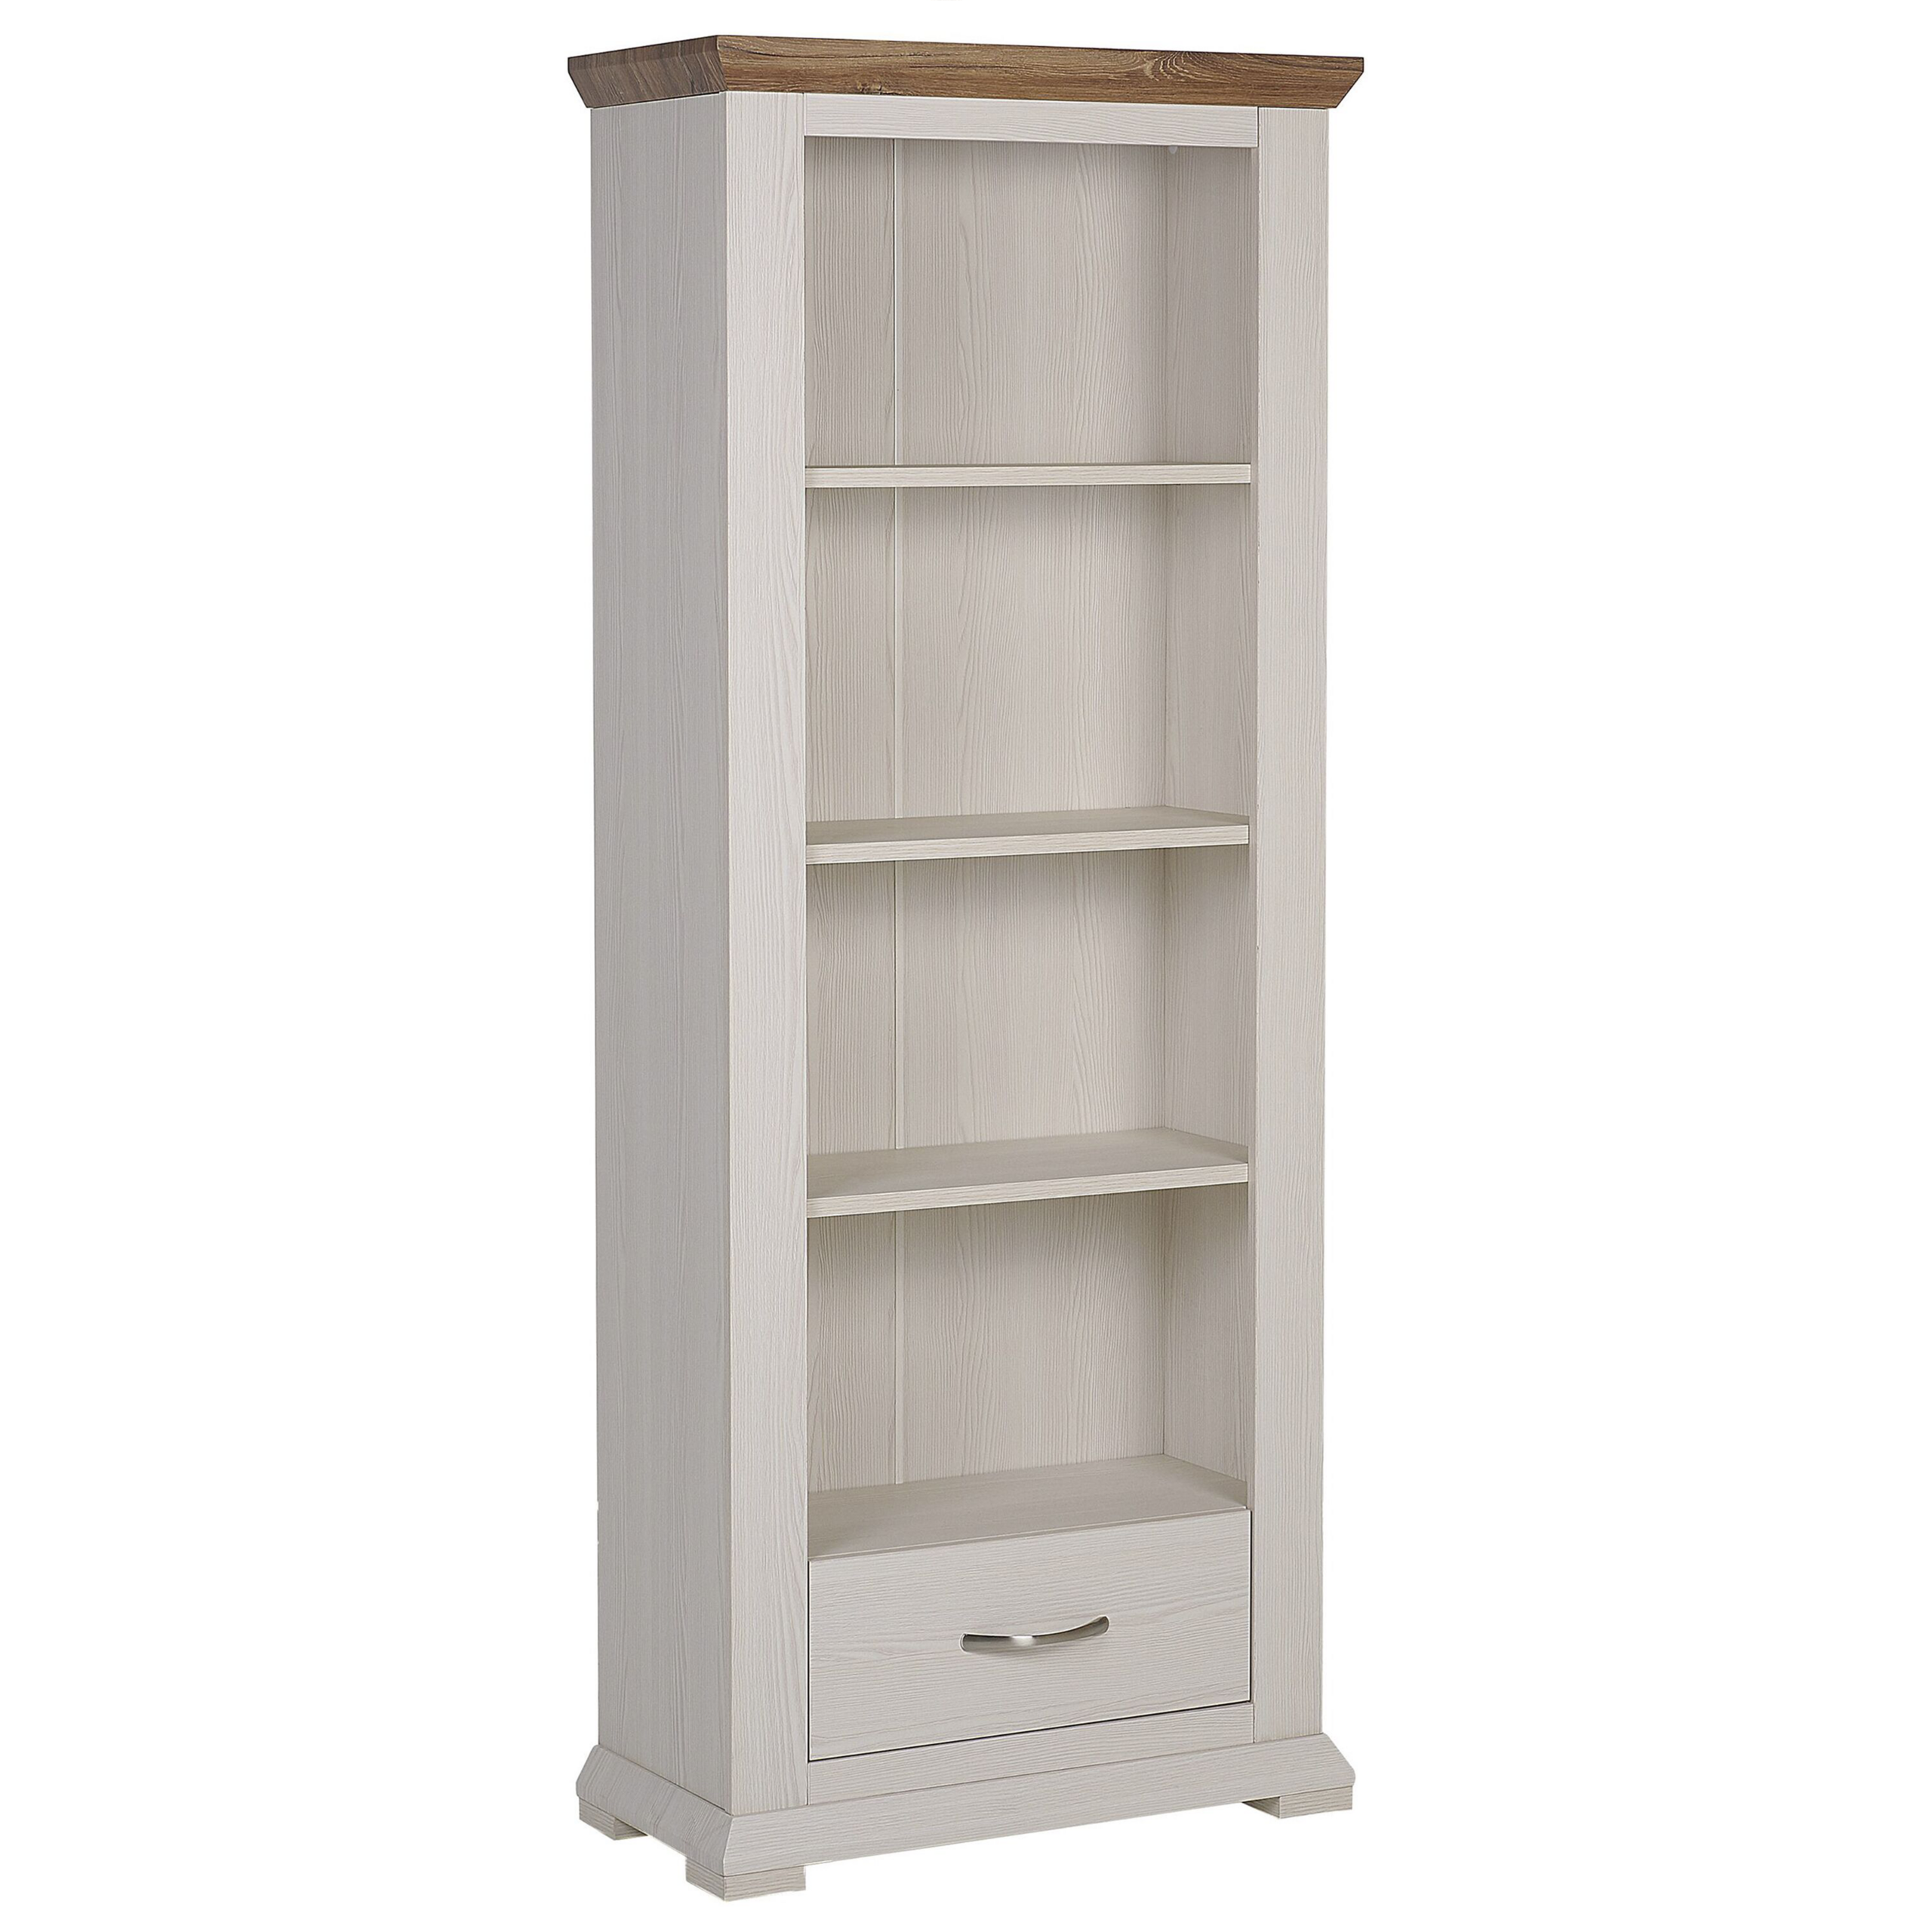 Beliani Bookshelf White with Dark Top Engineered Wood Particle Board 4 Tiers Shelves 1 Drawer Storage Unit Living Room Furniture